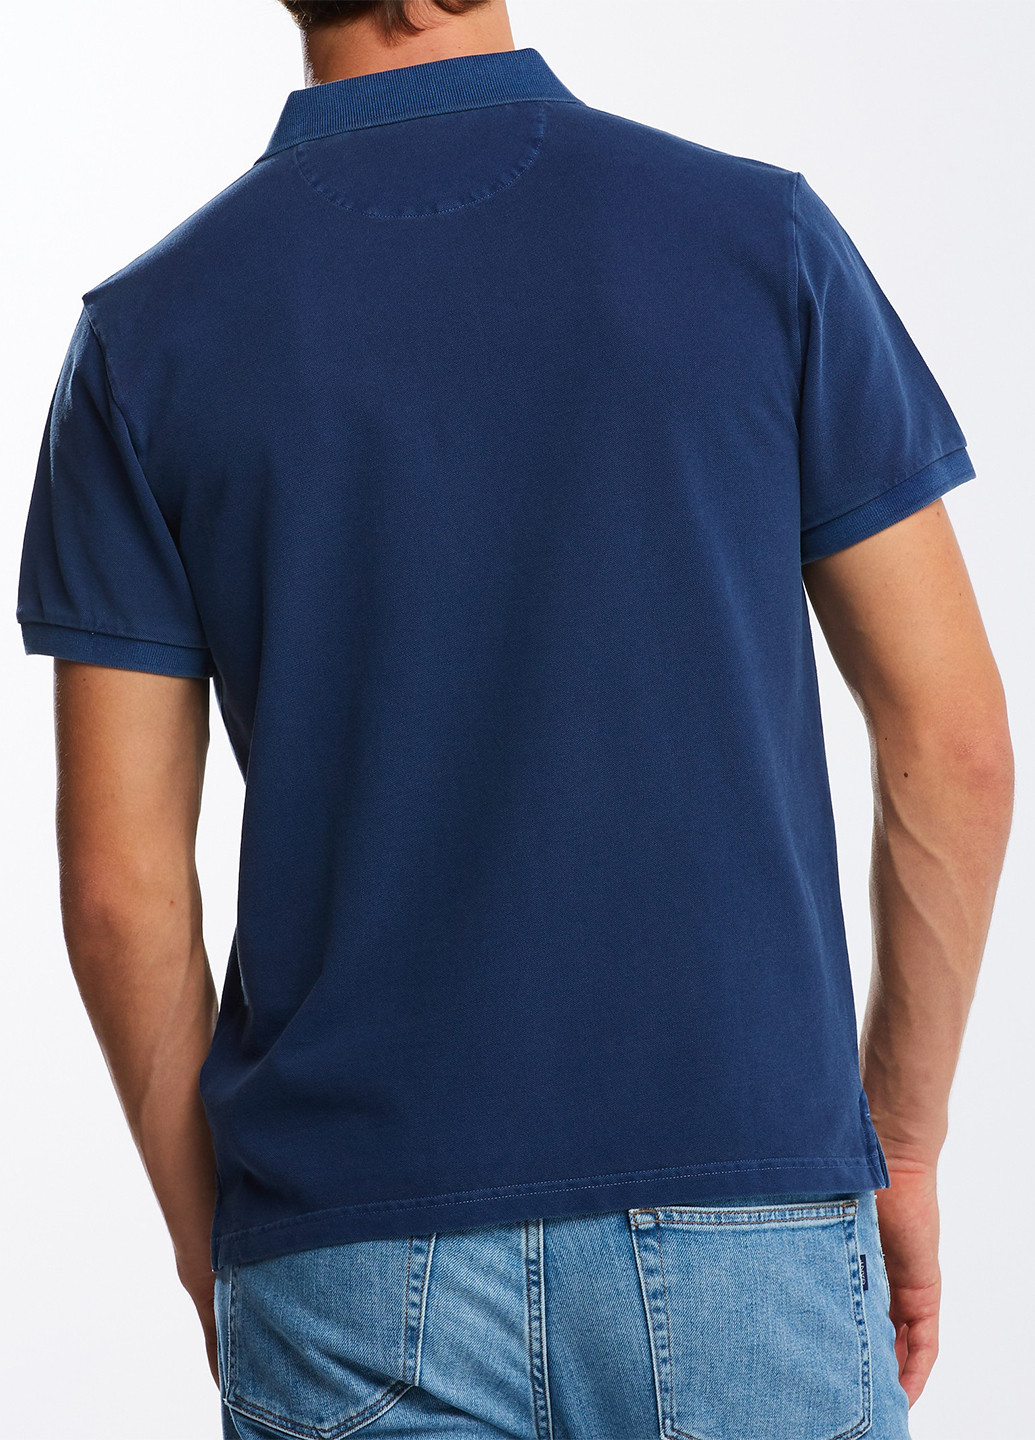 Темно-синяя футболка-поло для мужчин Gant с логотипом